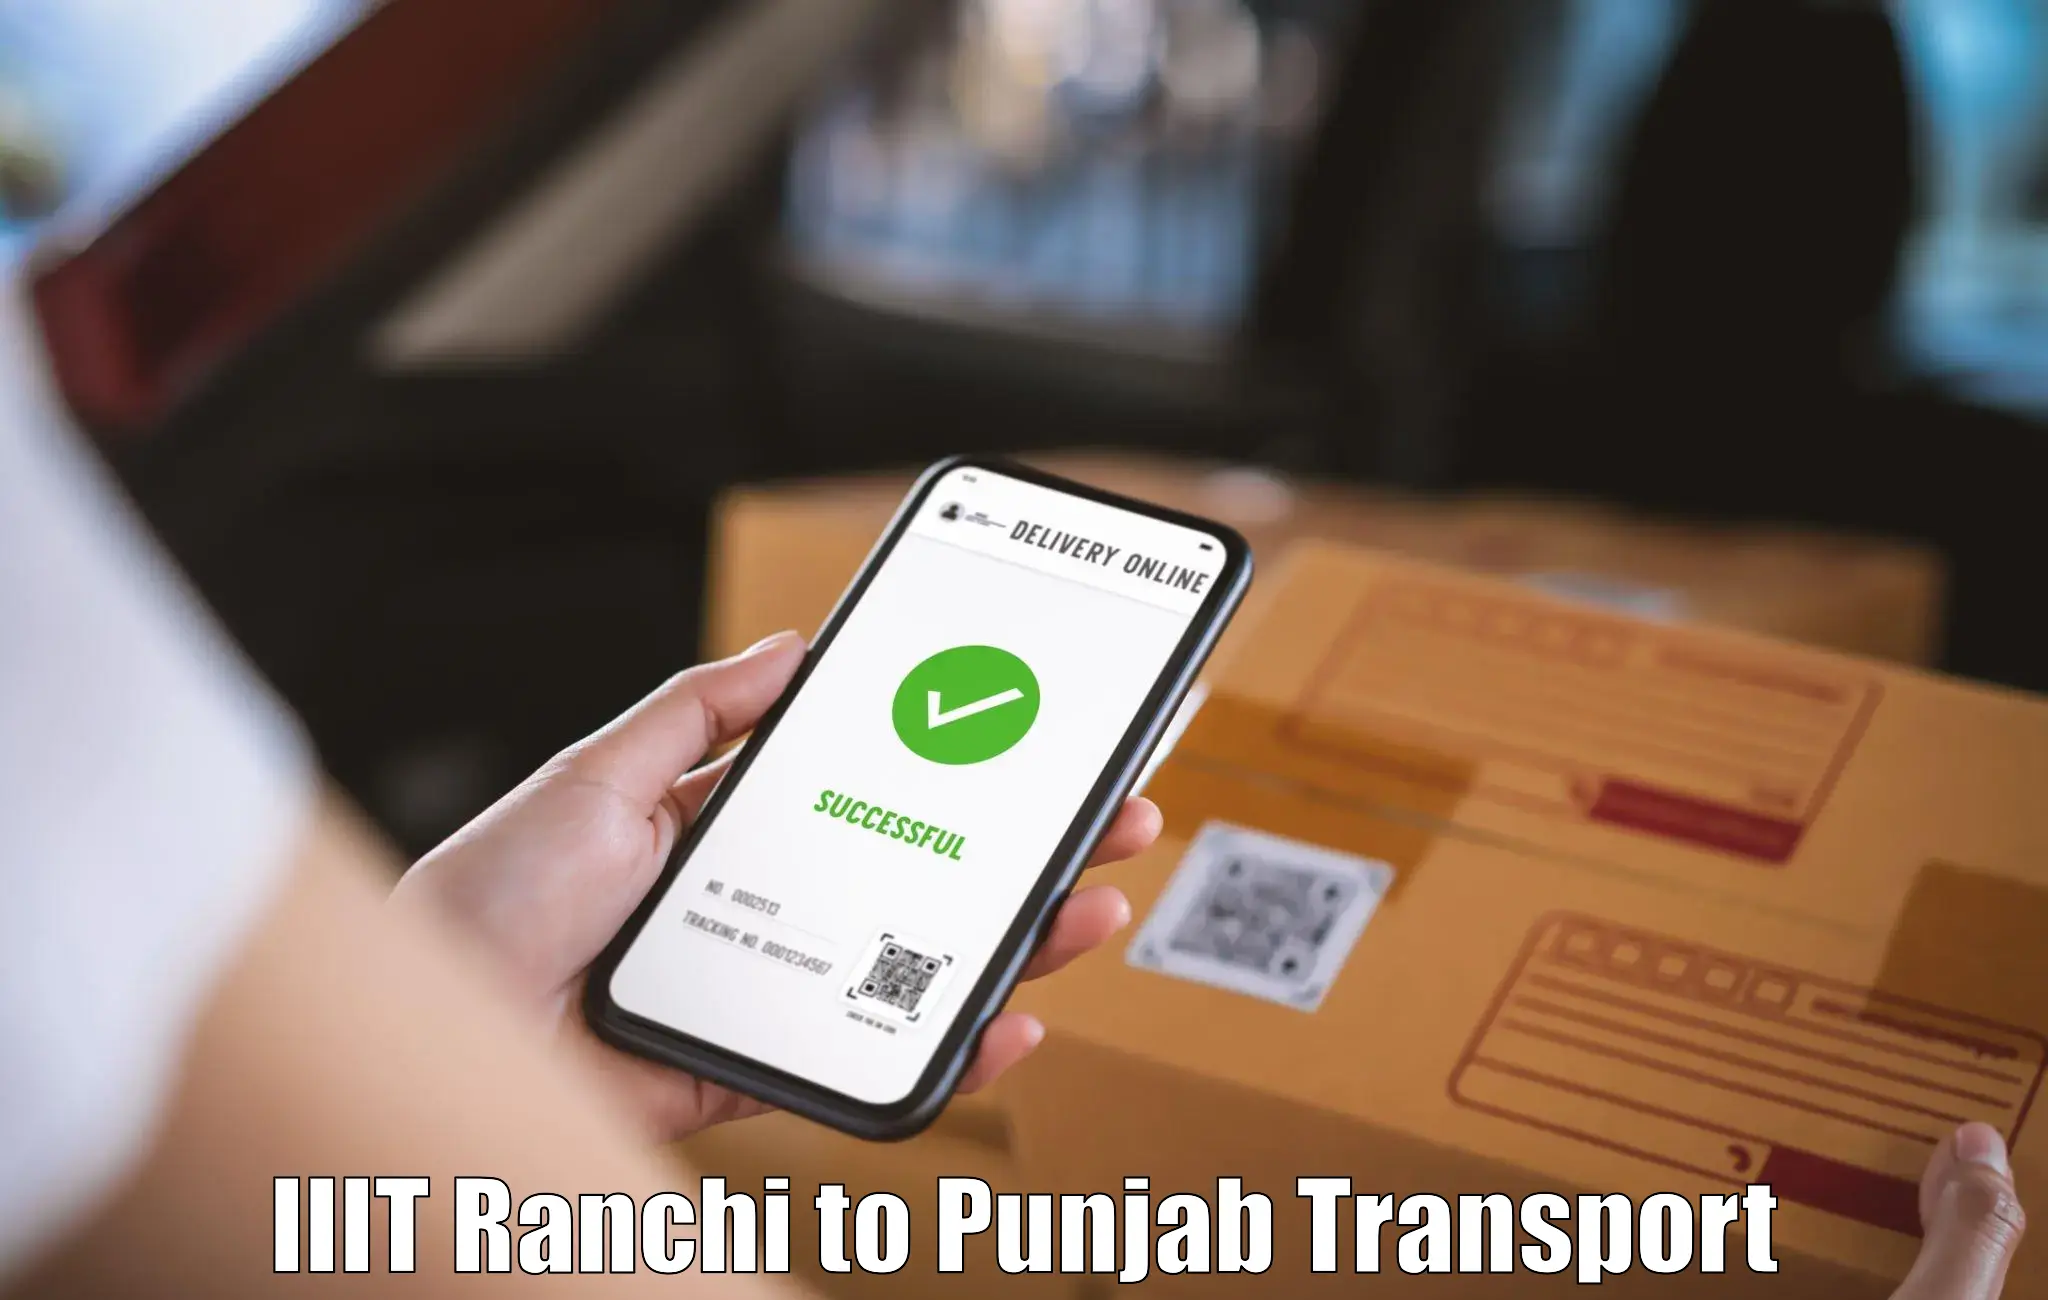 Transport in sharing IIIT Ranchi to Barnala